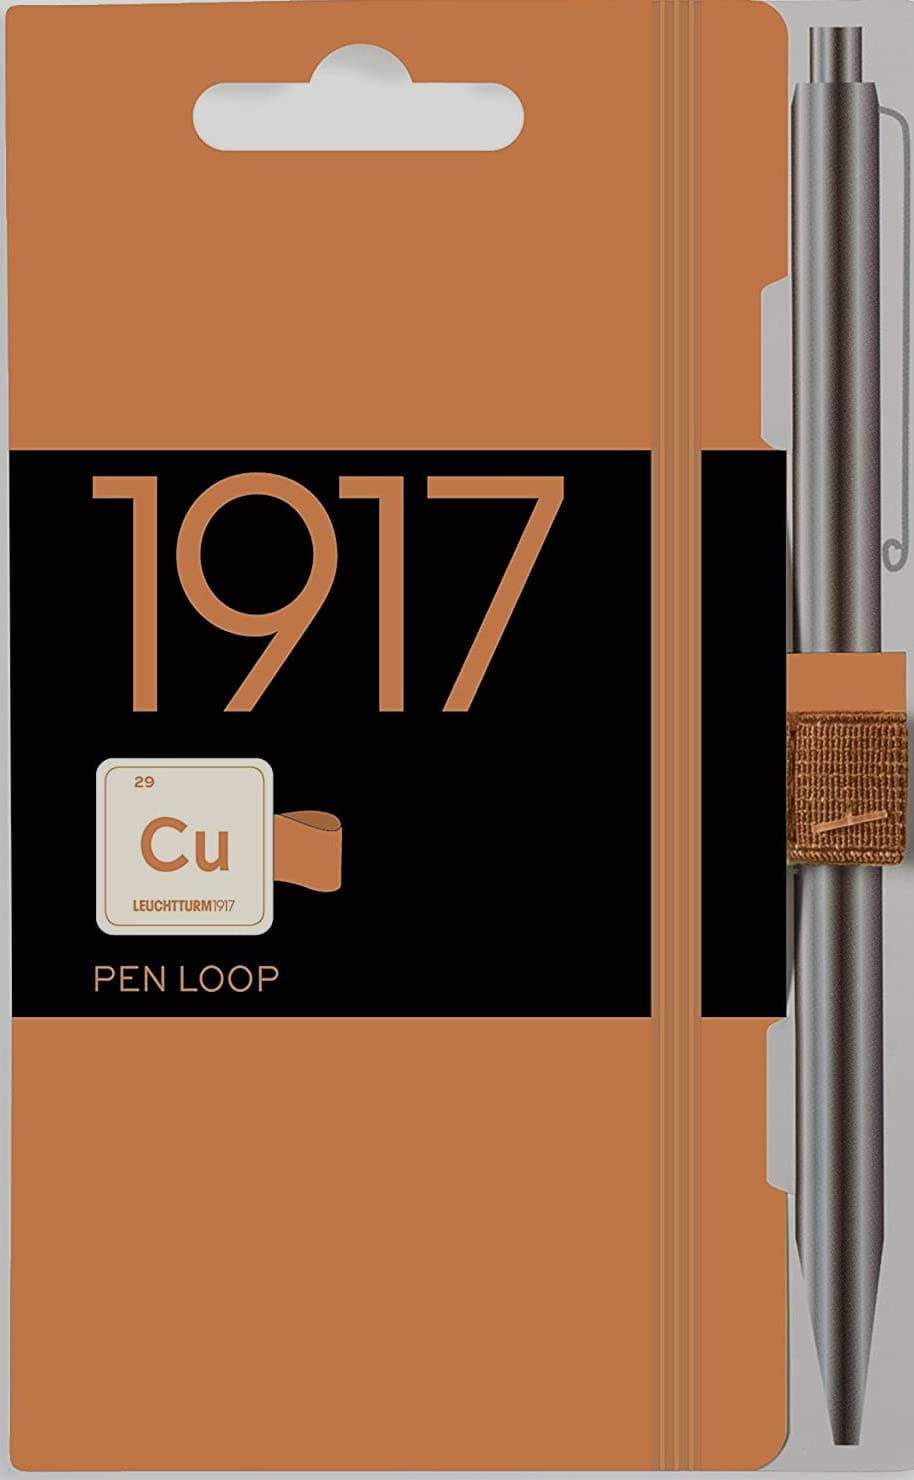 Leuchtturm1917 Self-adhesive Pen Loop - Blesket Canada